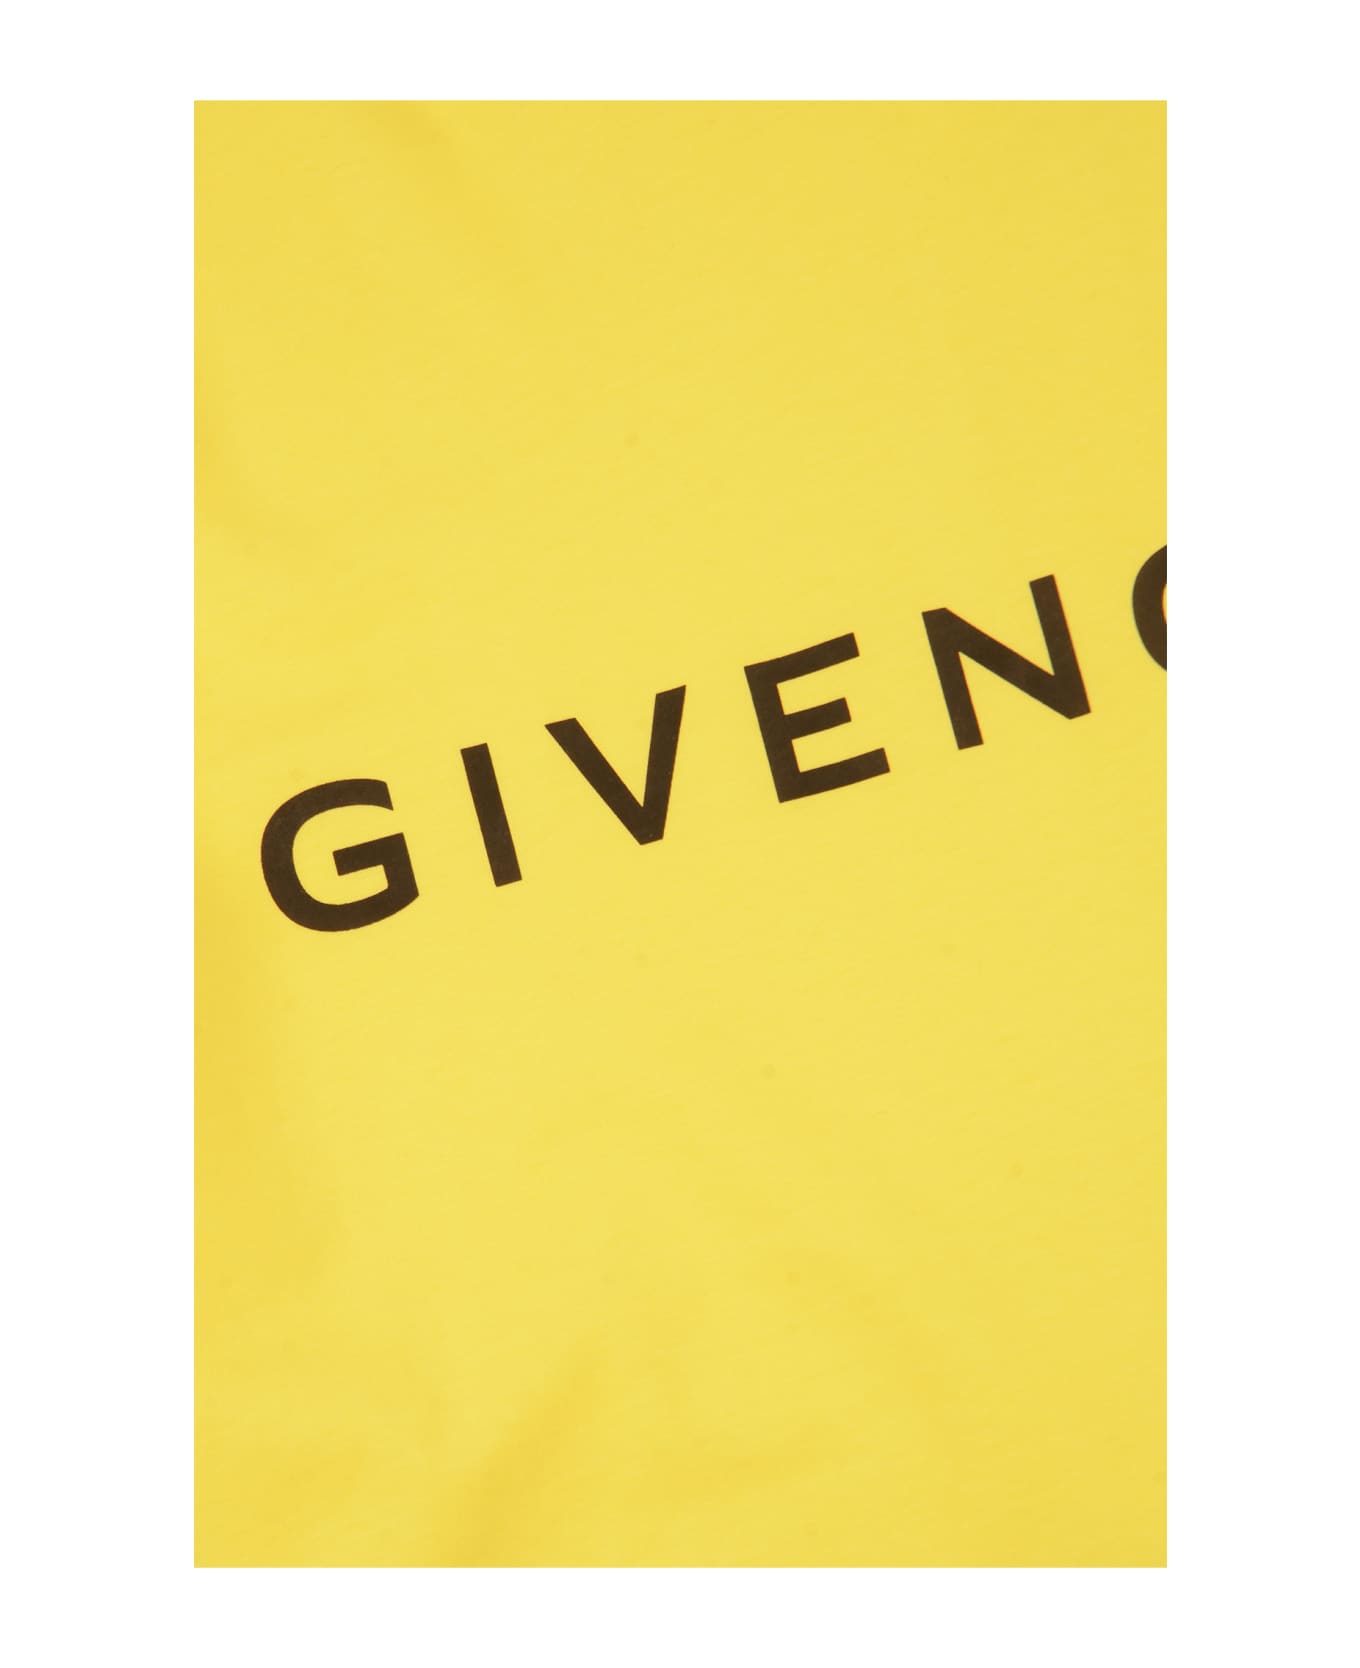 Givenchy Logo Print Regular T-shirt - Yellow